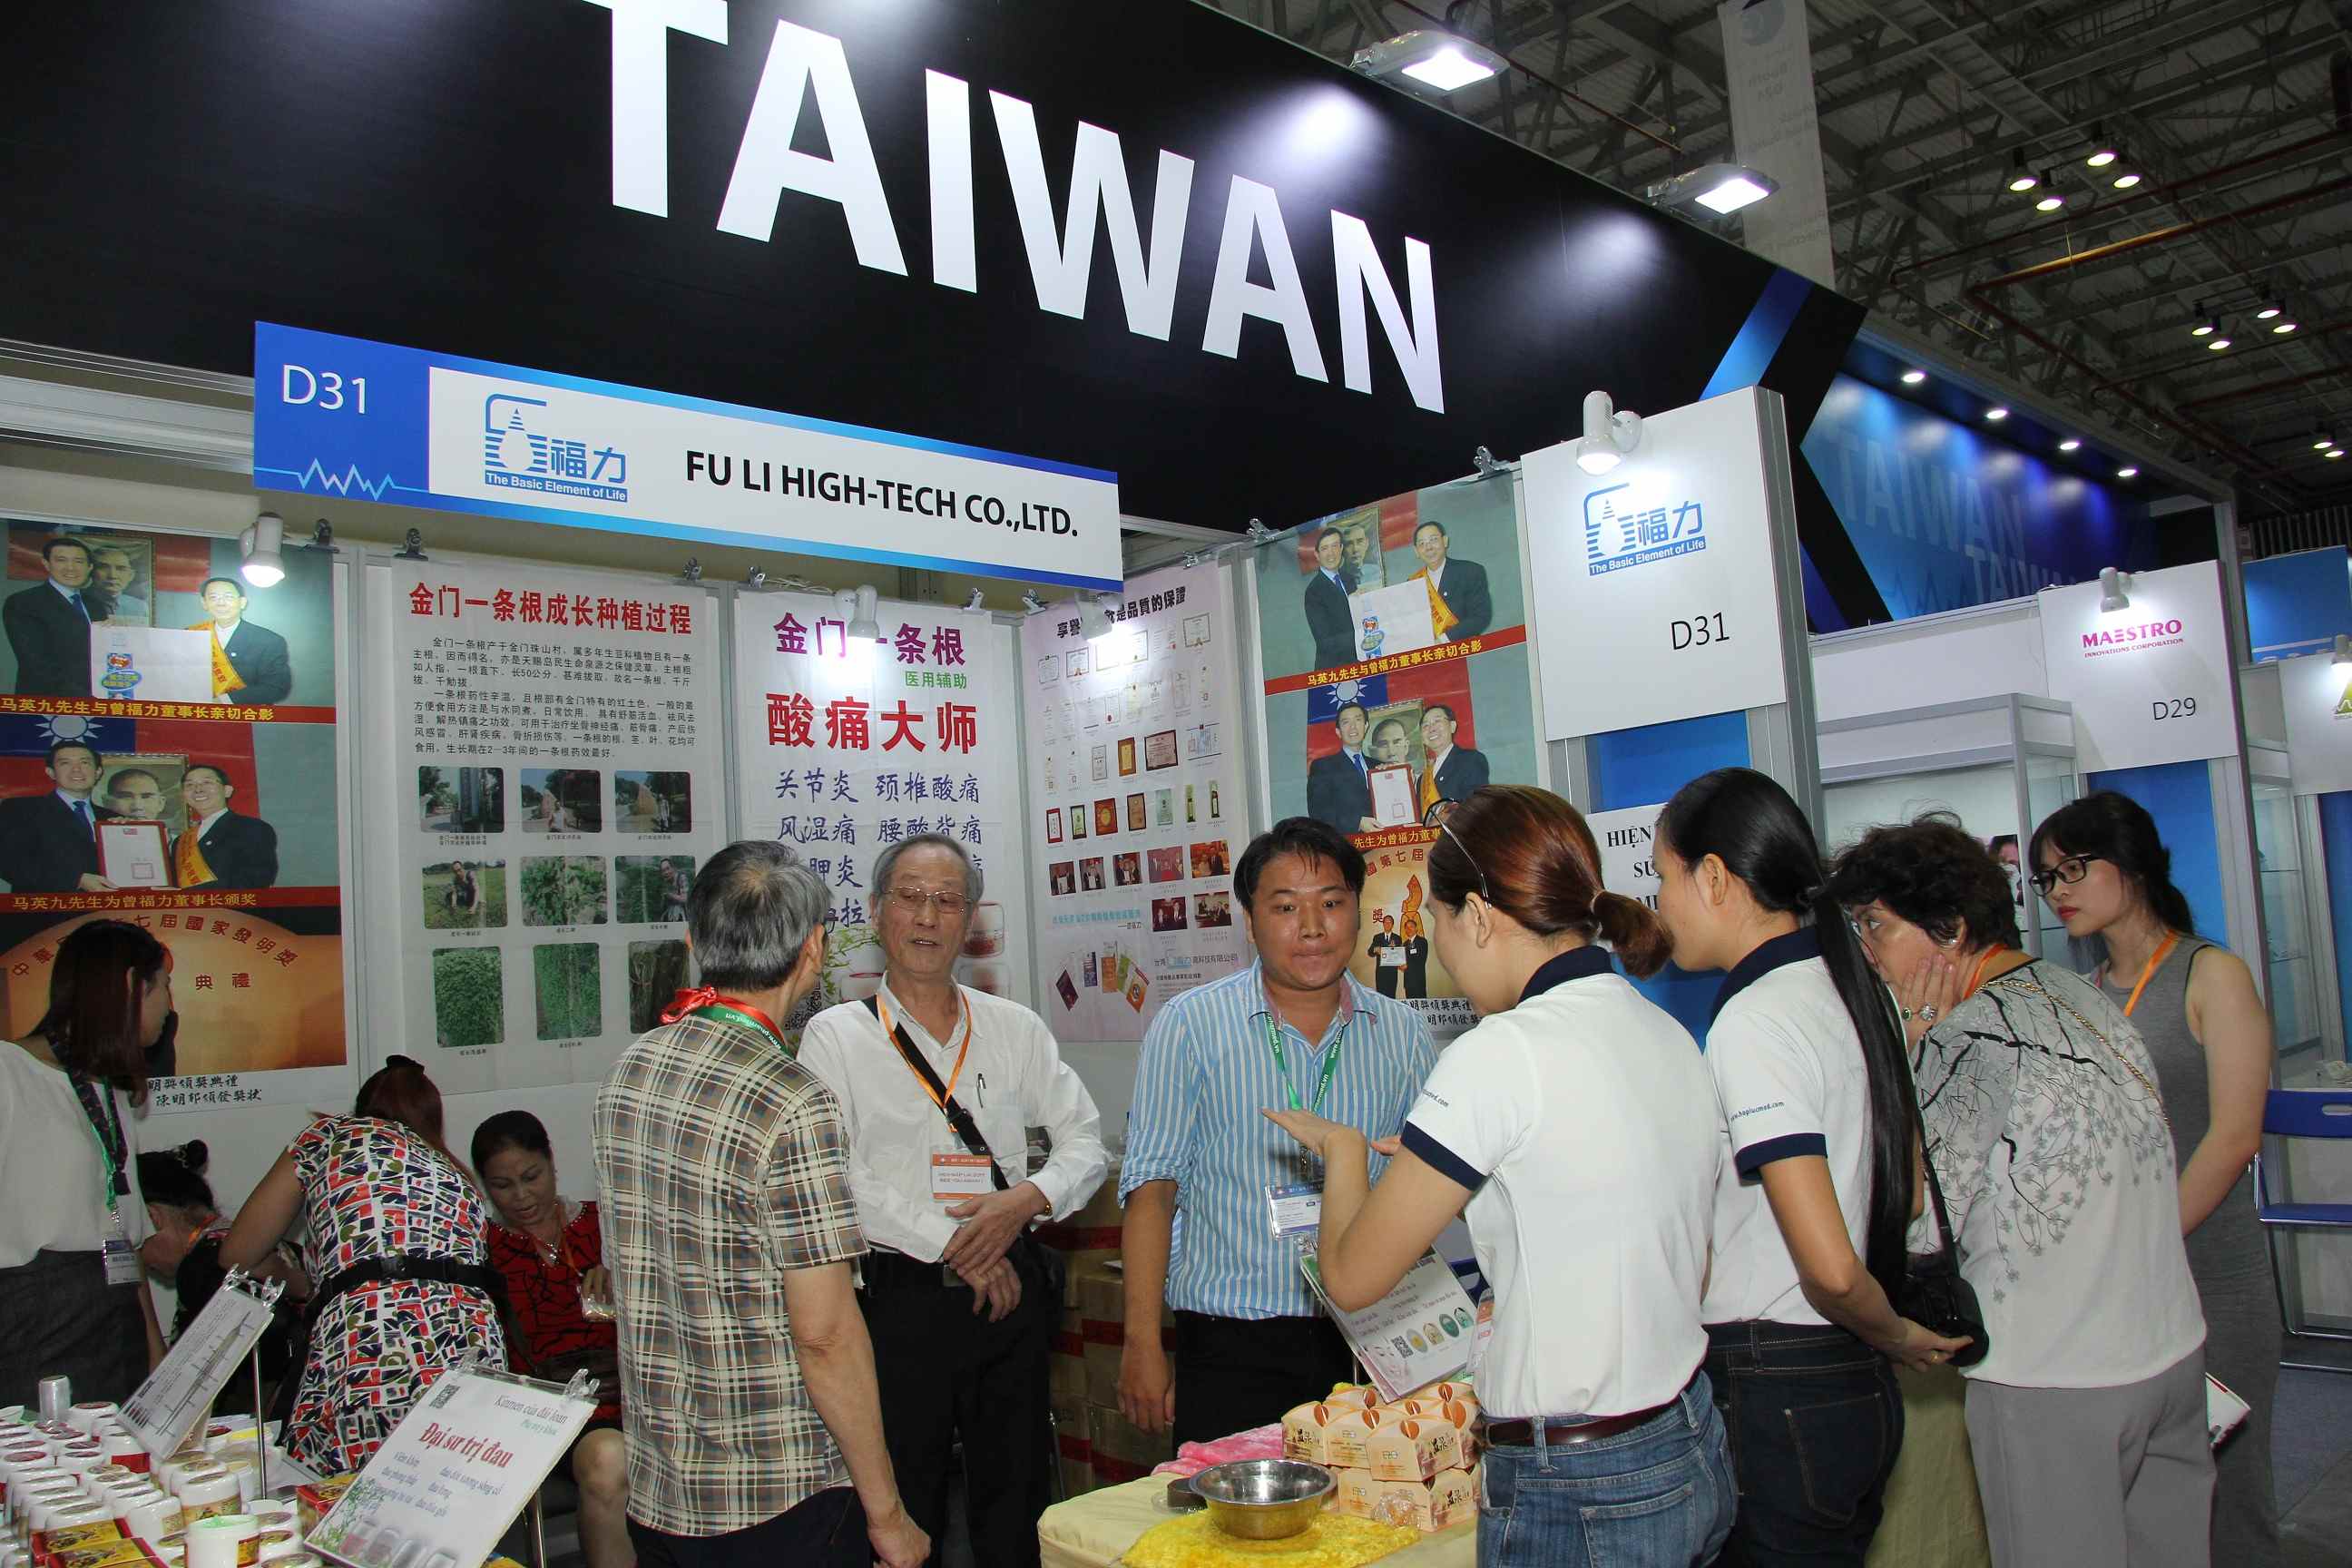 Taiwan Pavilion 1